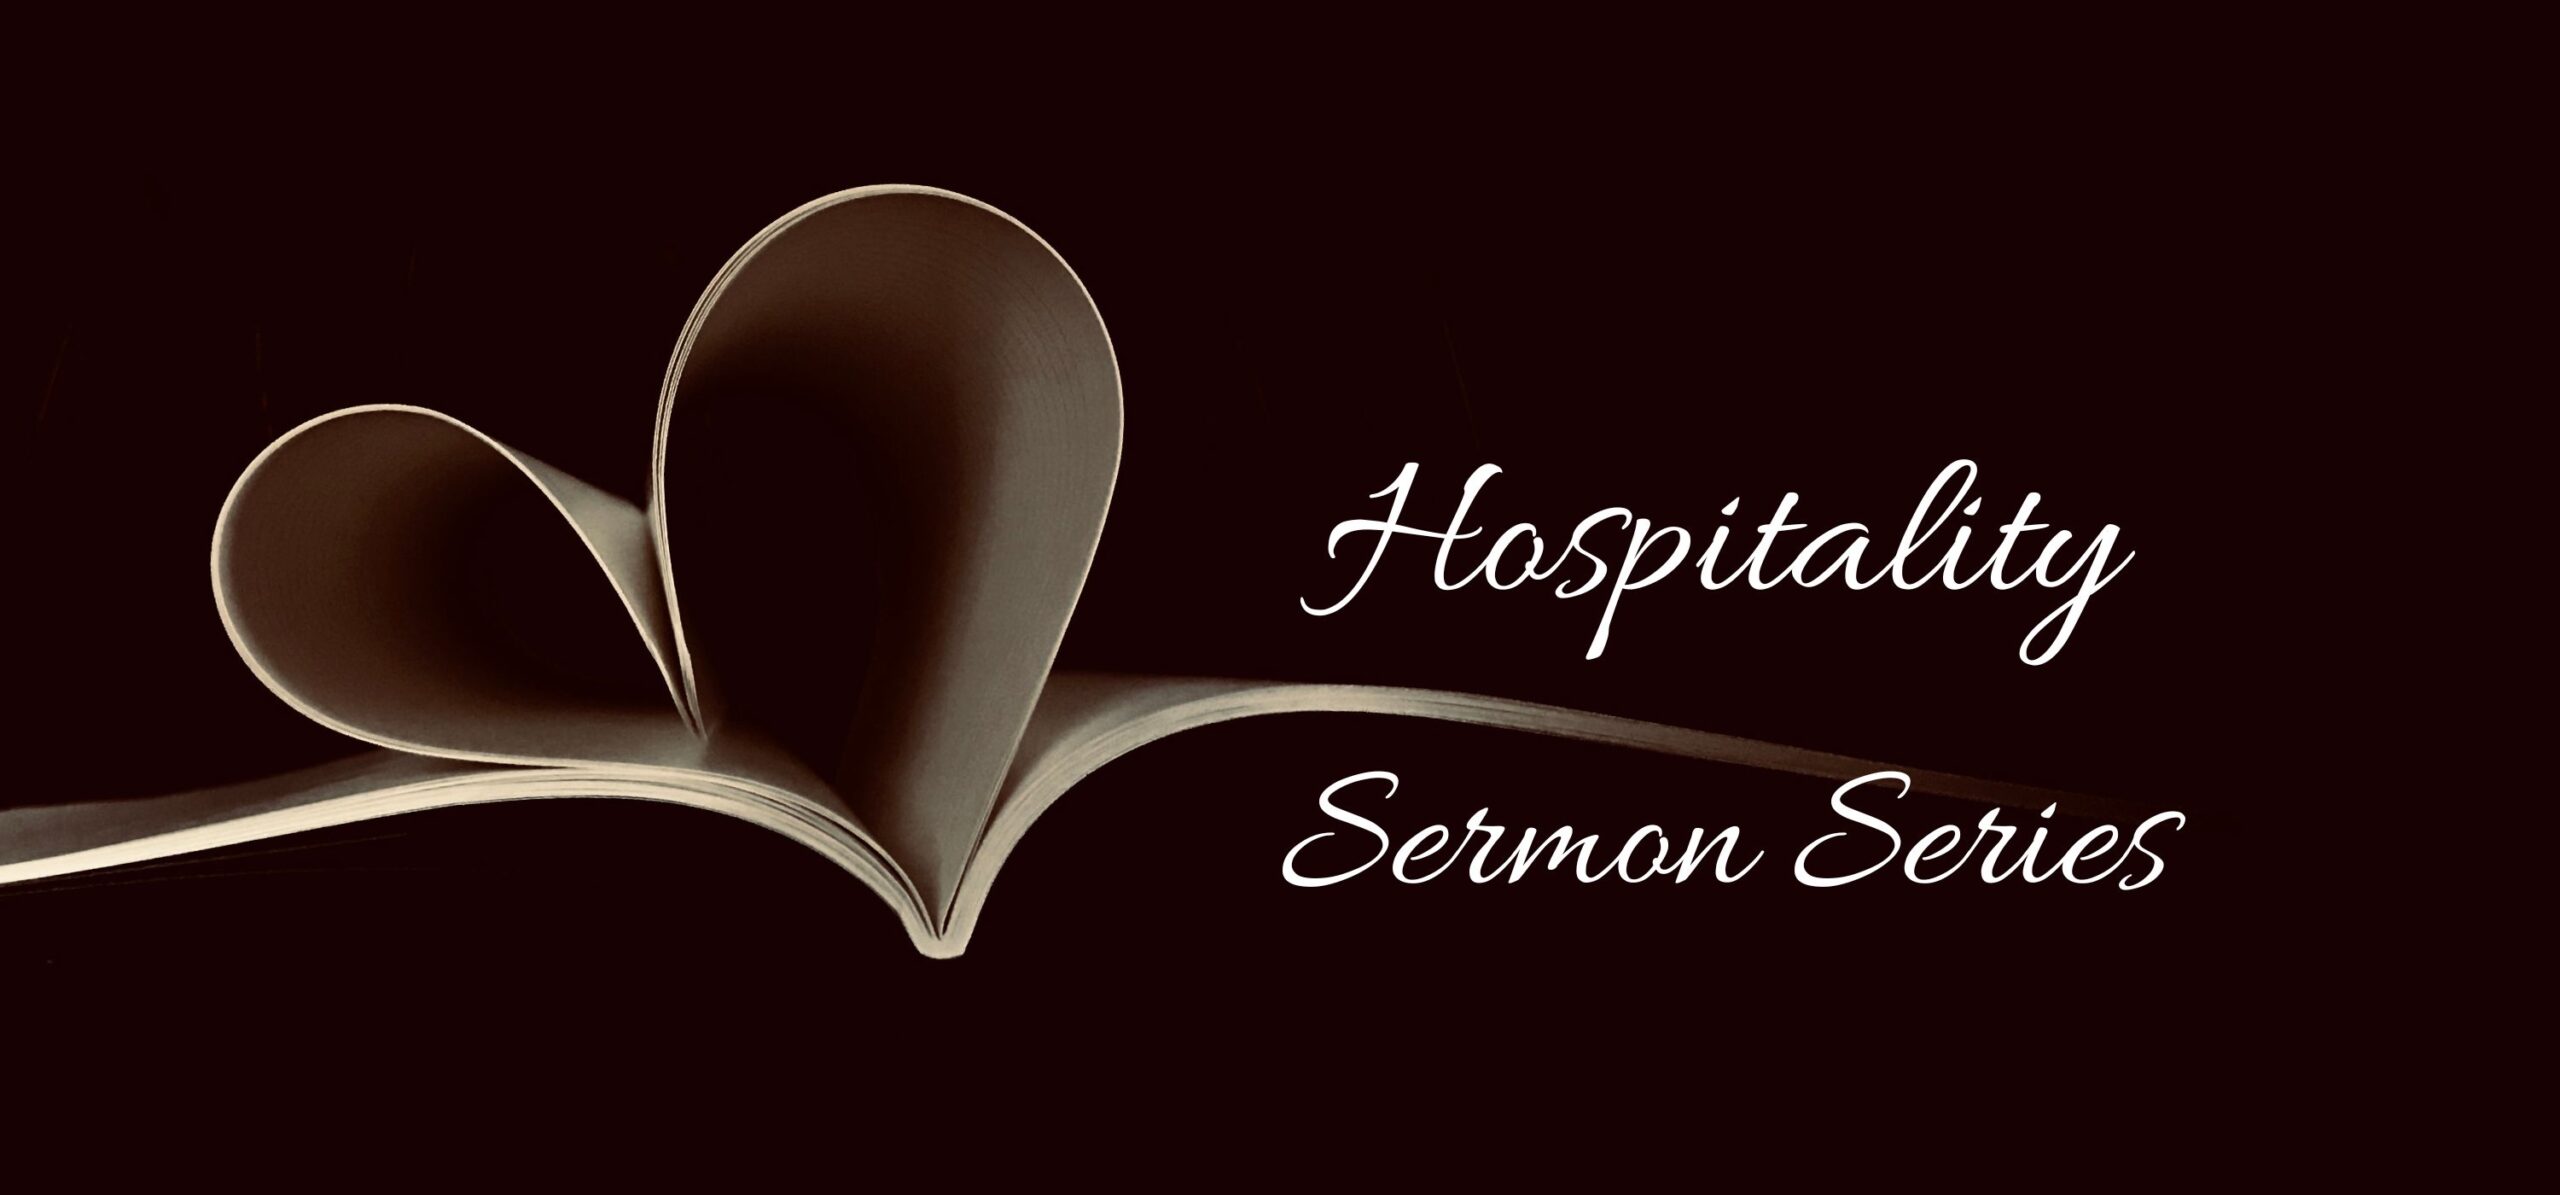 Hospitality Sermon Series